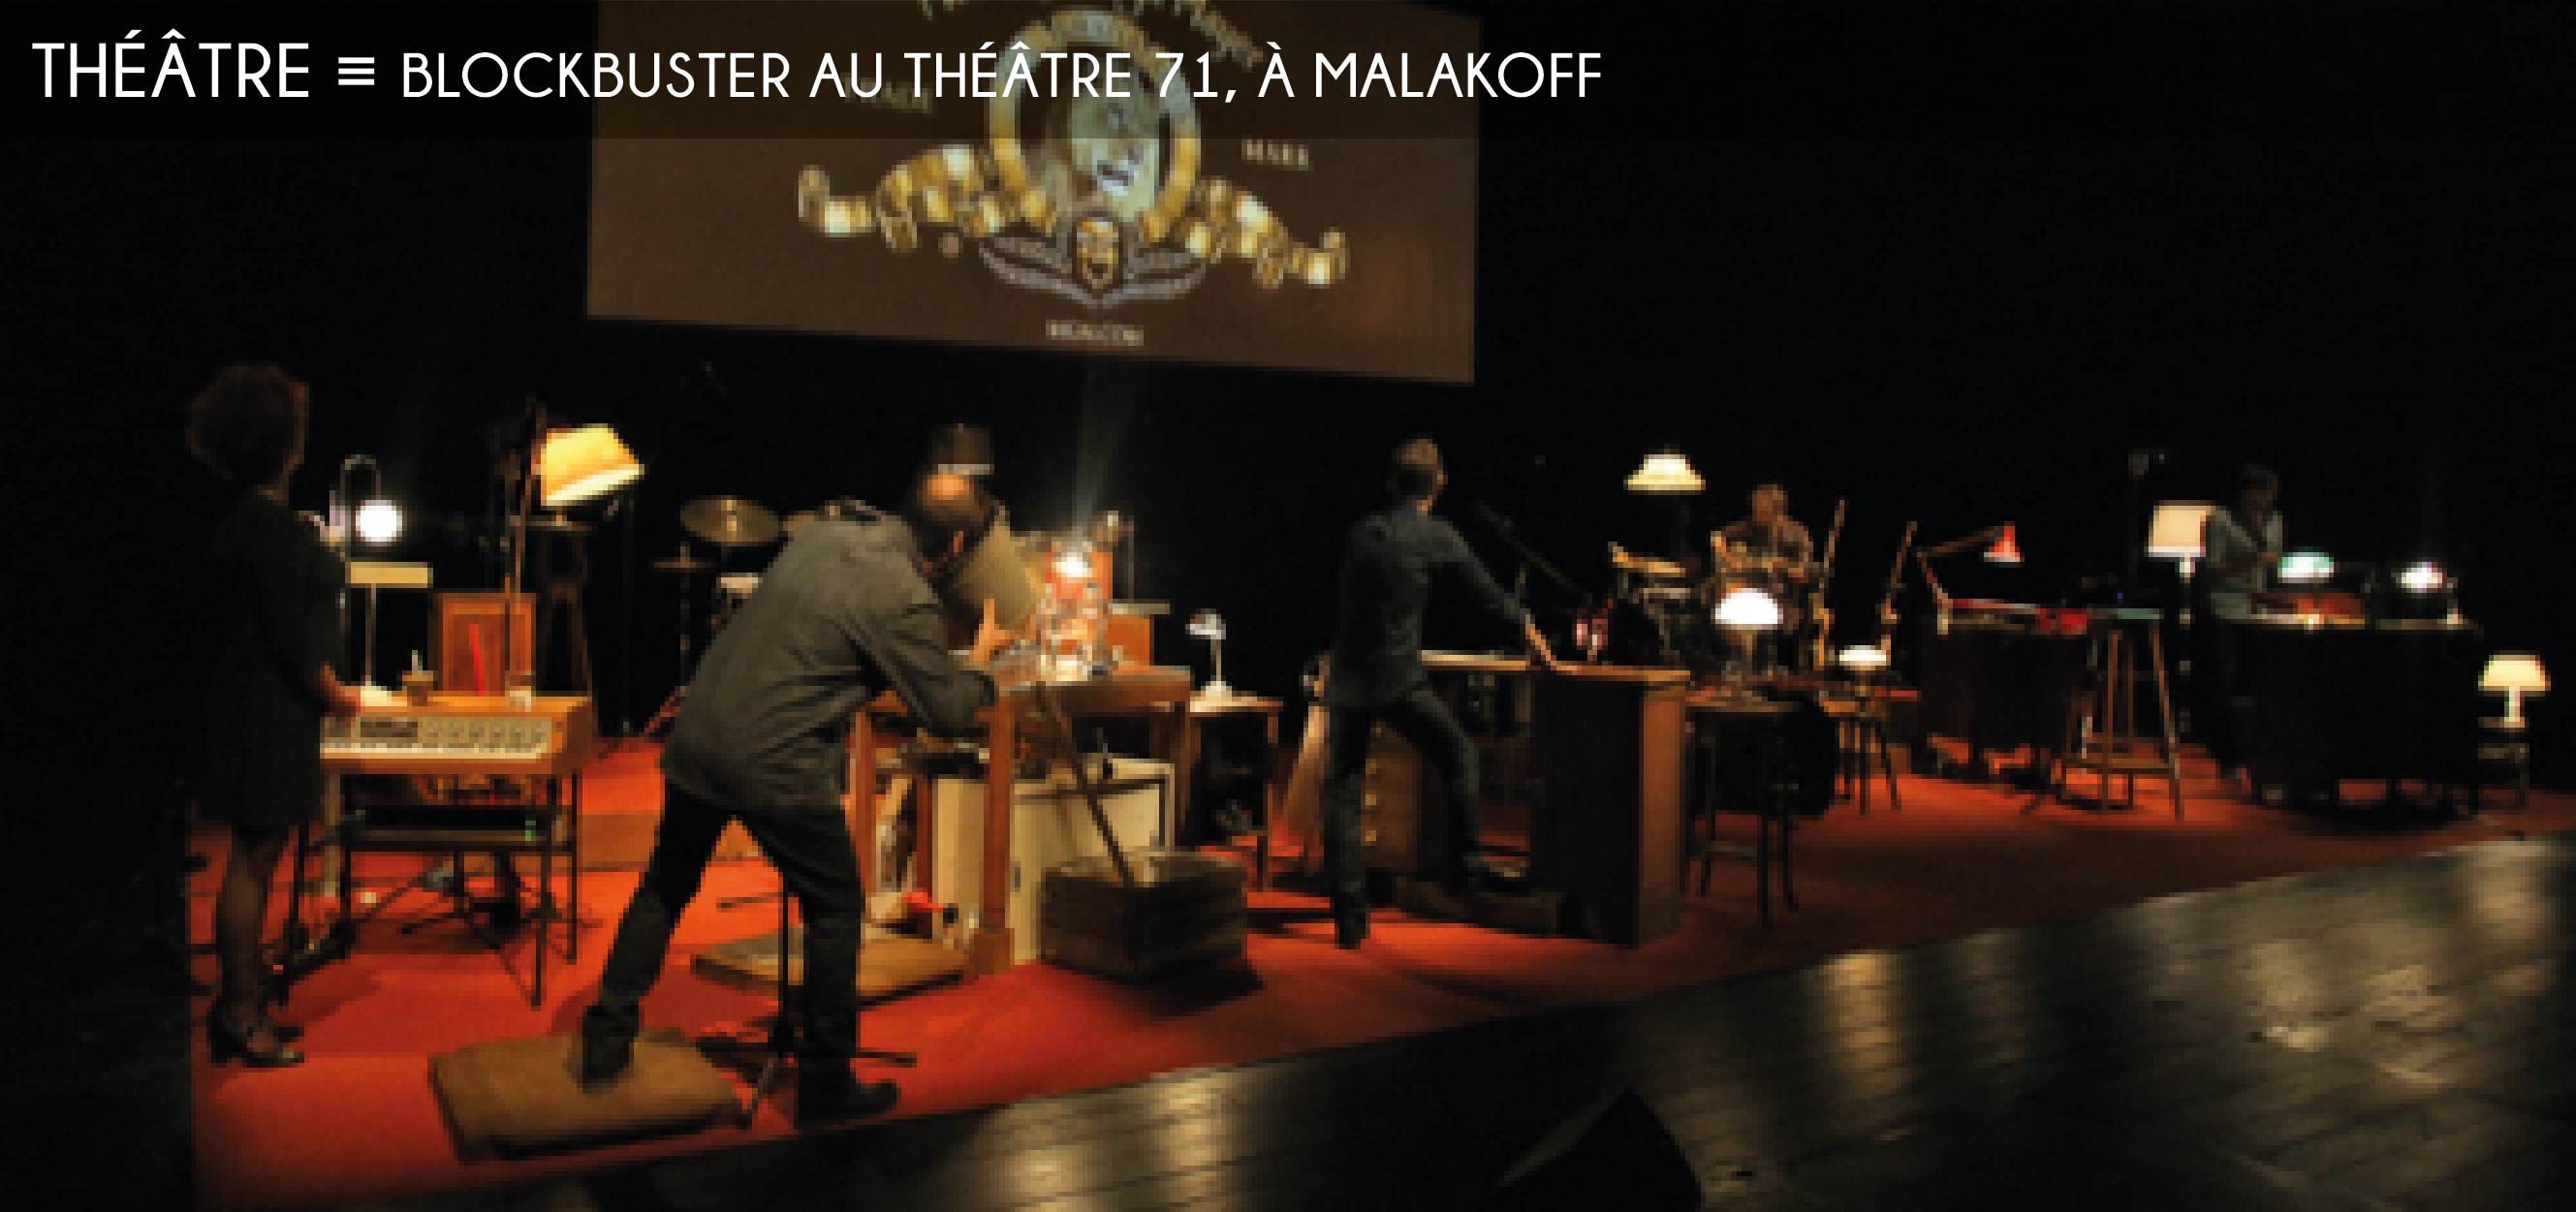 Blockbuster au Théâtre 71 à Malakoff